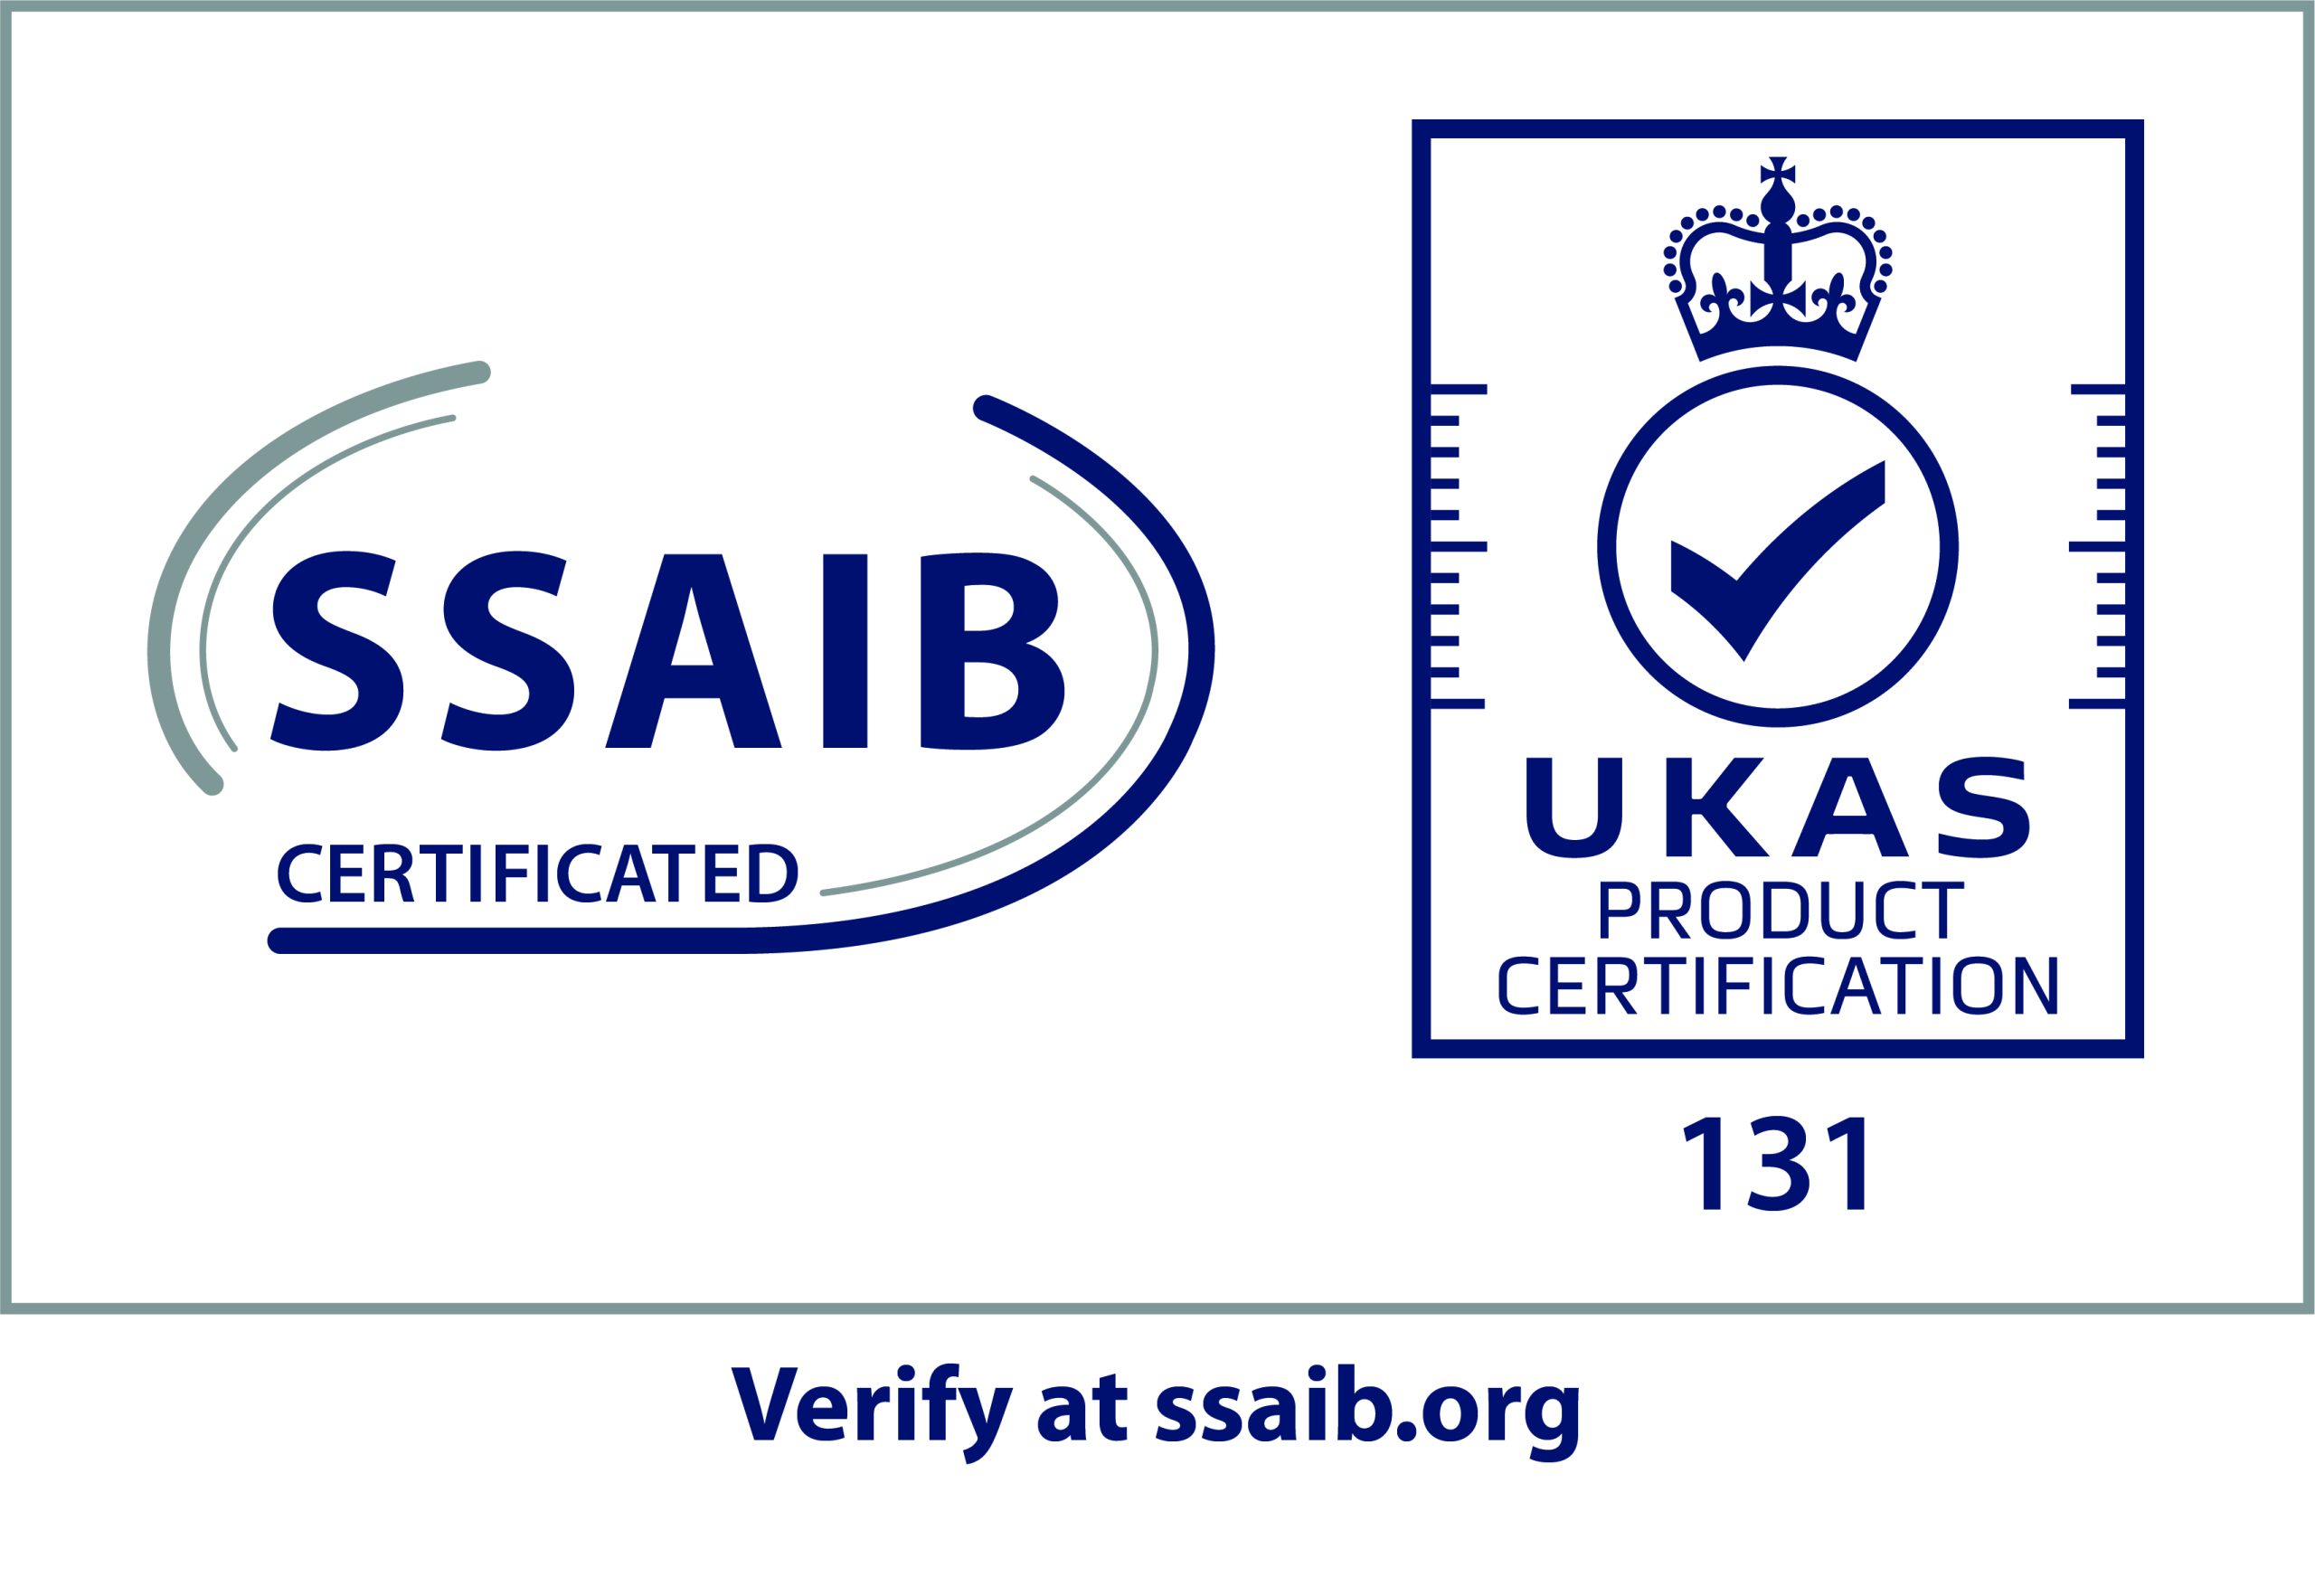 SSAIB Certificated Logo UKAS Certification Logo